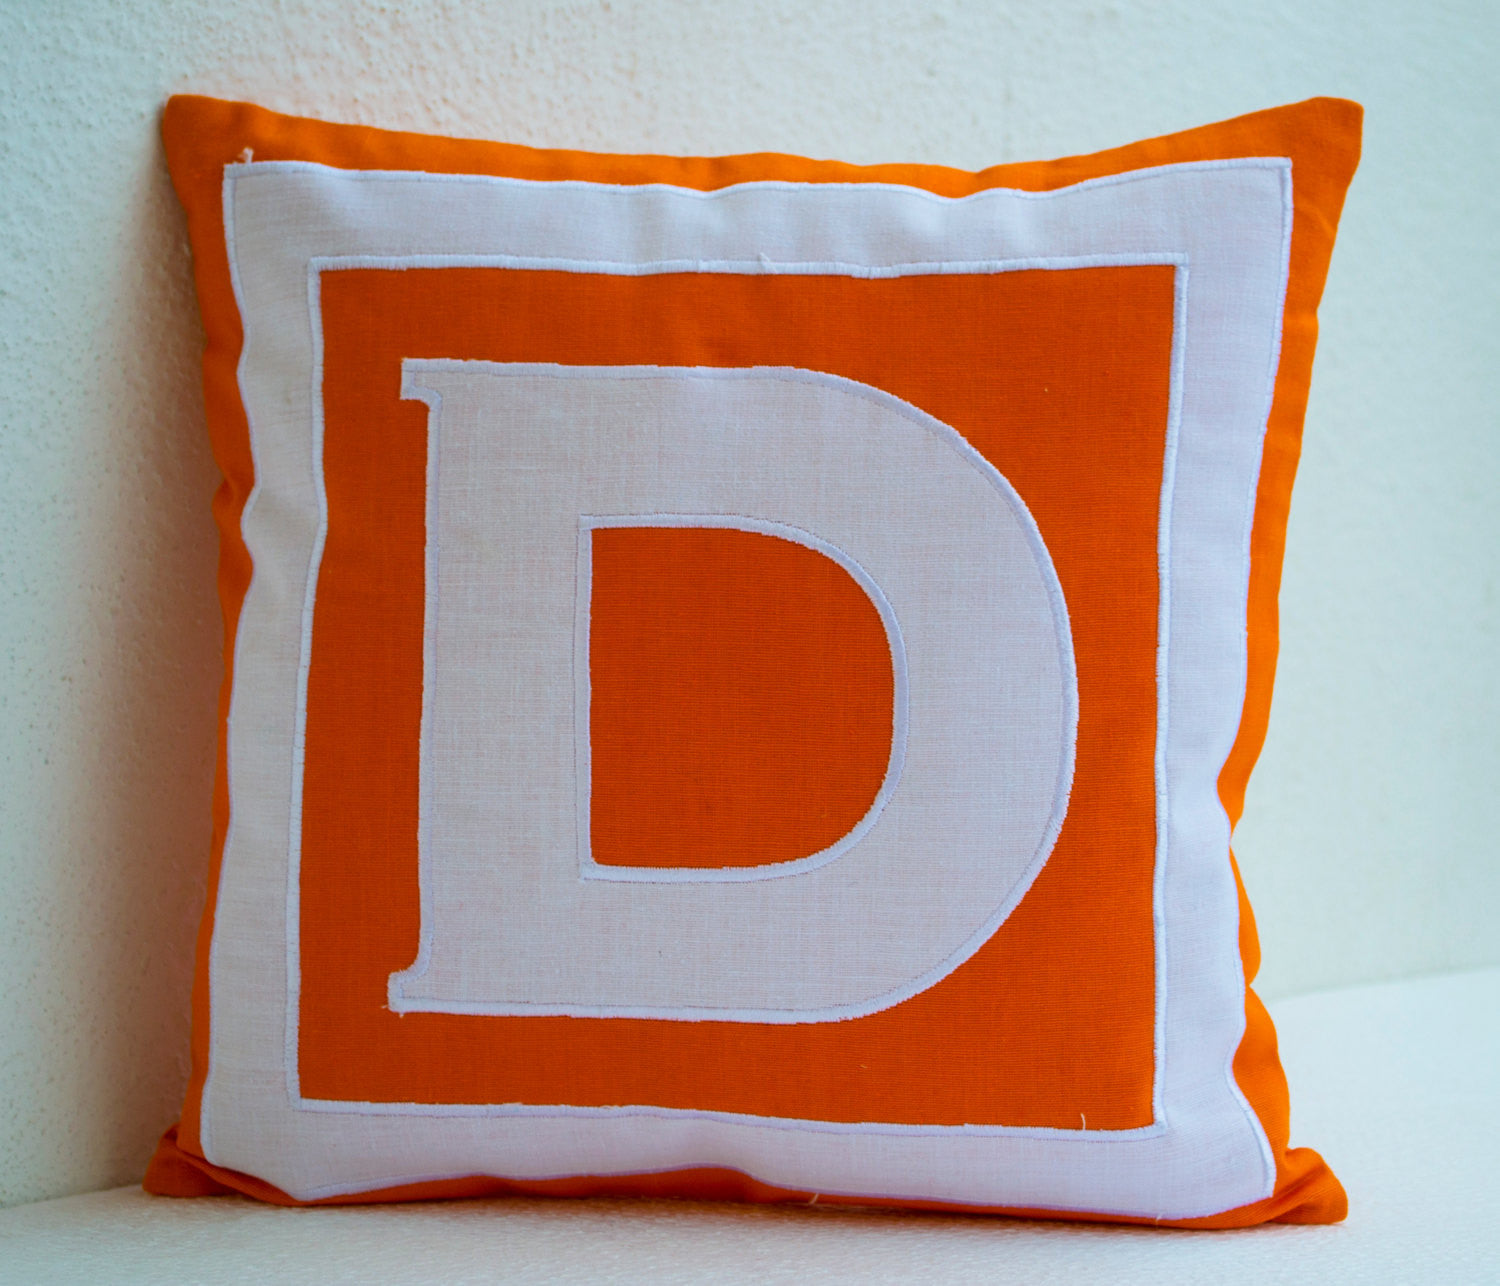 Handmade bold orange and white monogrammed alphabet pillow